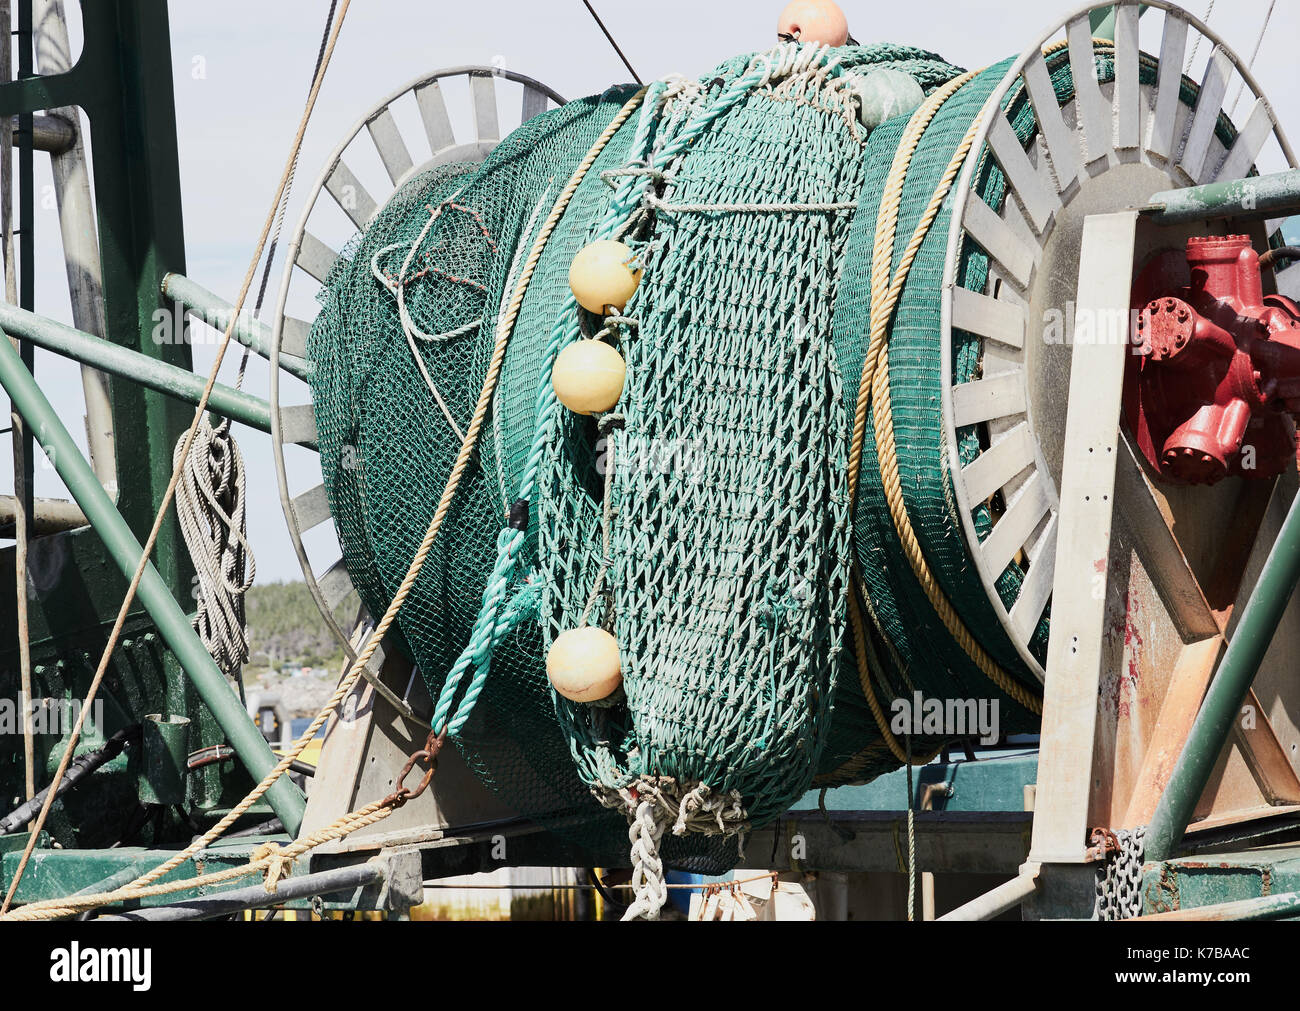 https://c8.alamy.com/comp/K7BAAC/giant-roll-of-fish-nets-on-trawler-port-au-choix-newfoundland-canada-K7BAAC.jpg